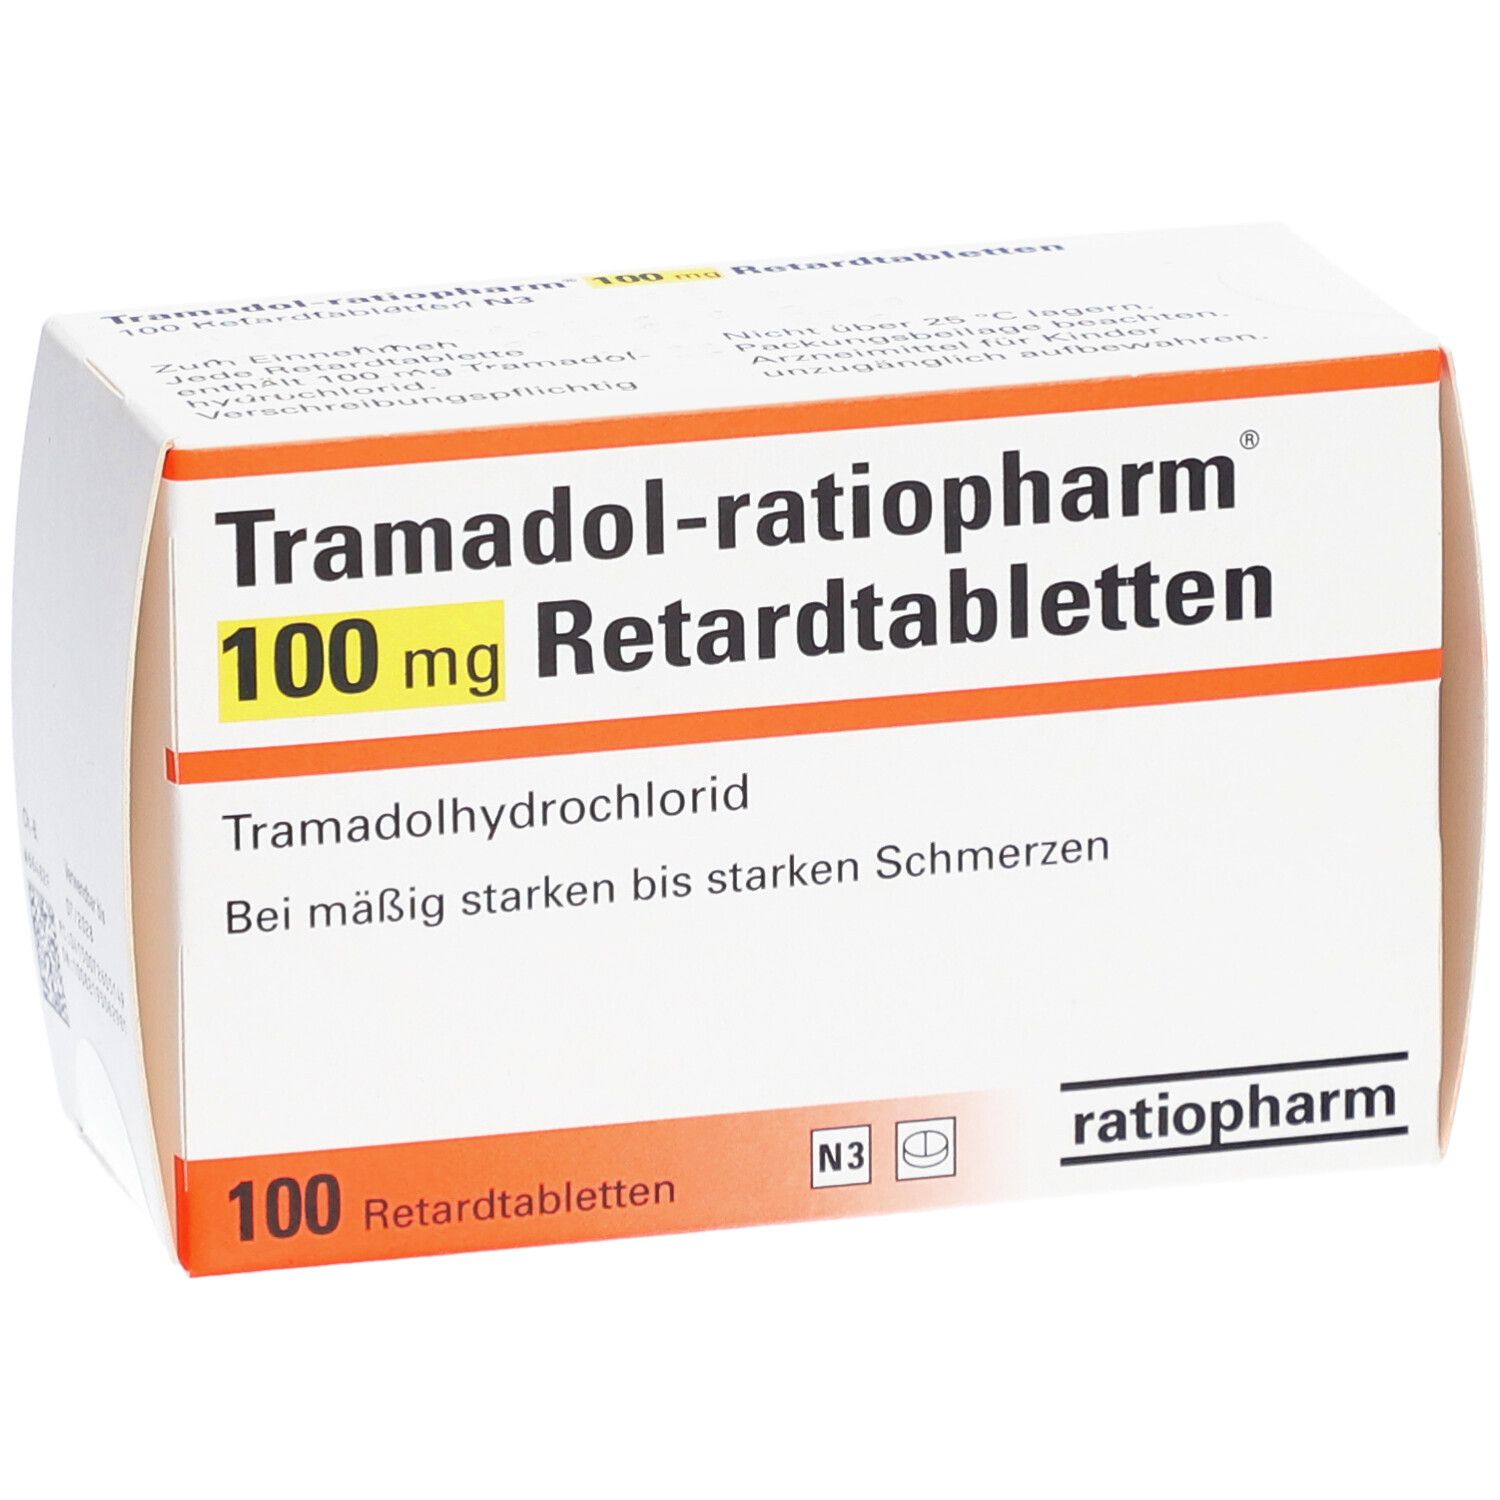 Tramadol-ratiopharm® 100 mg